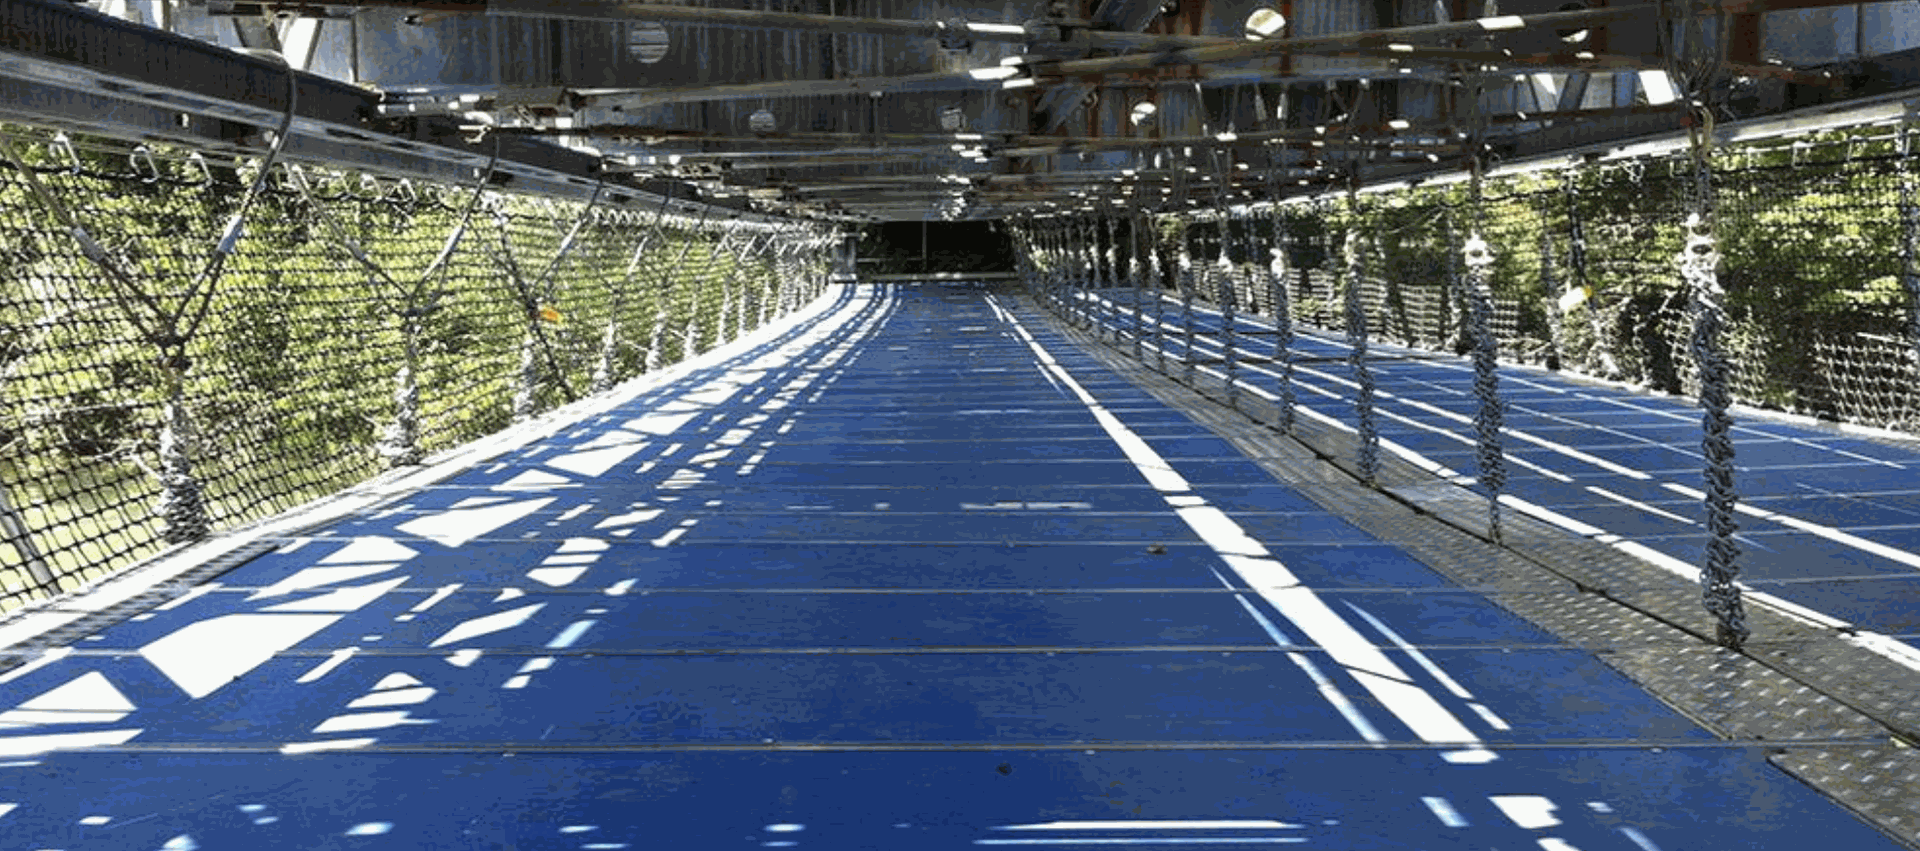 Youngman's suspended bridge solution